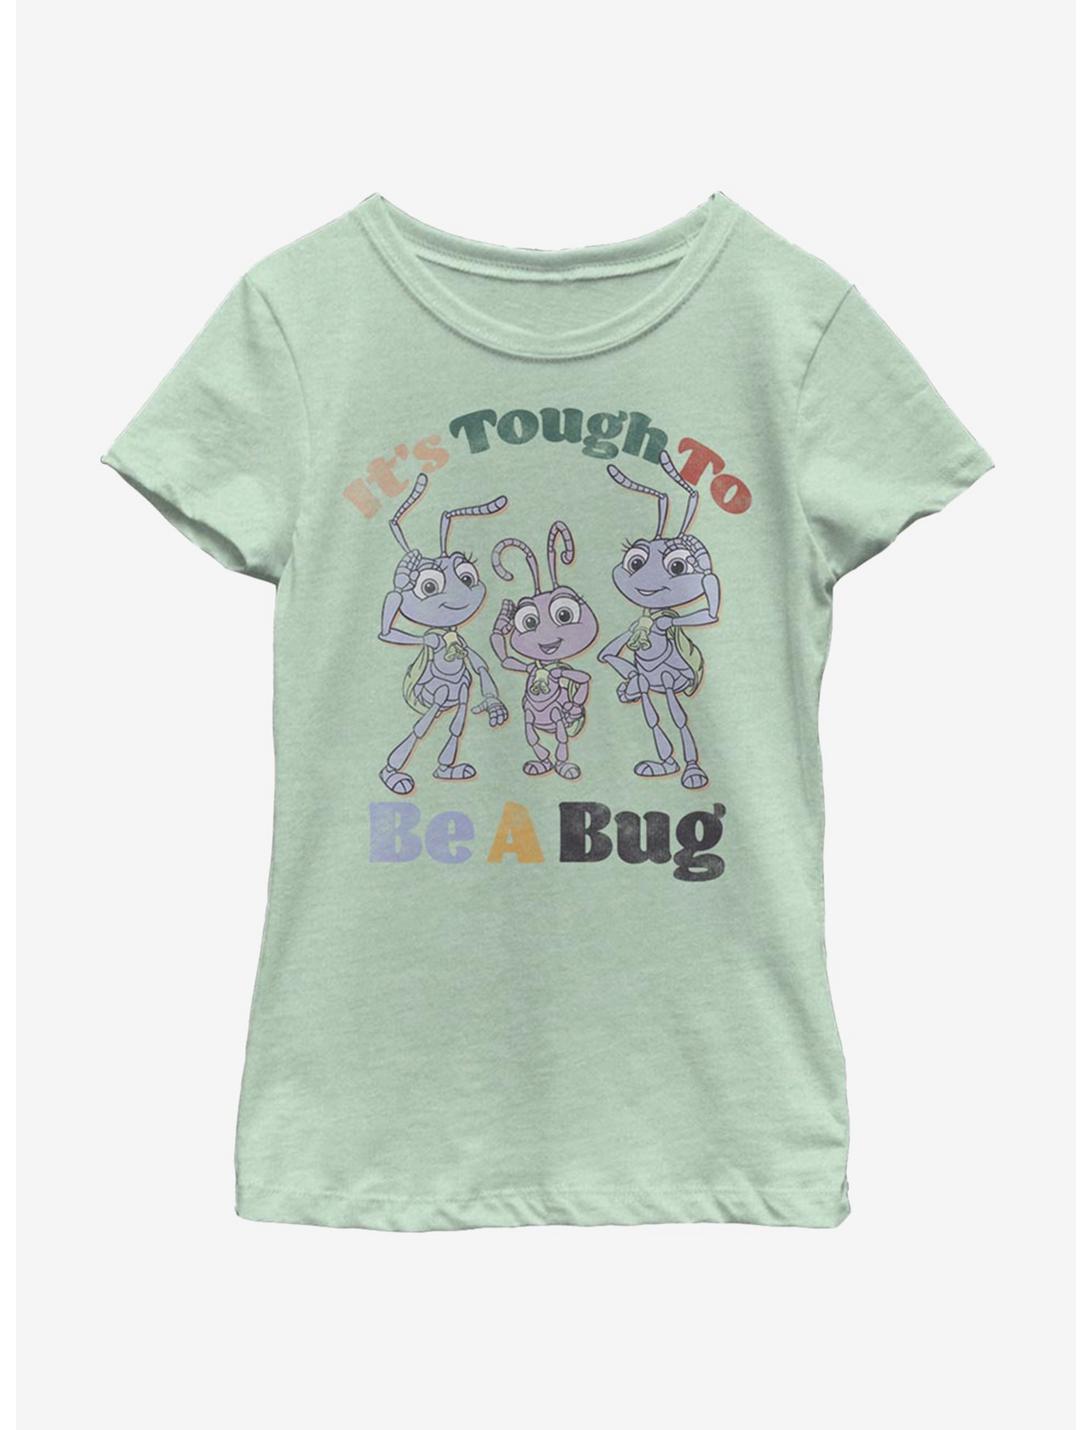 Disney Pixar A Bug's Life Big And Small Youth Girls T-Shirt, MINT, hi-res